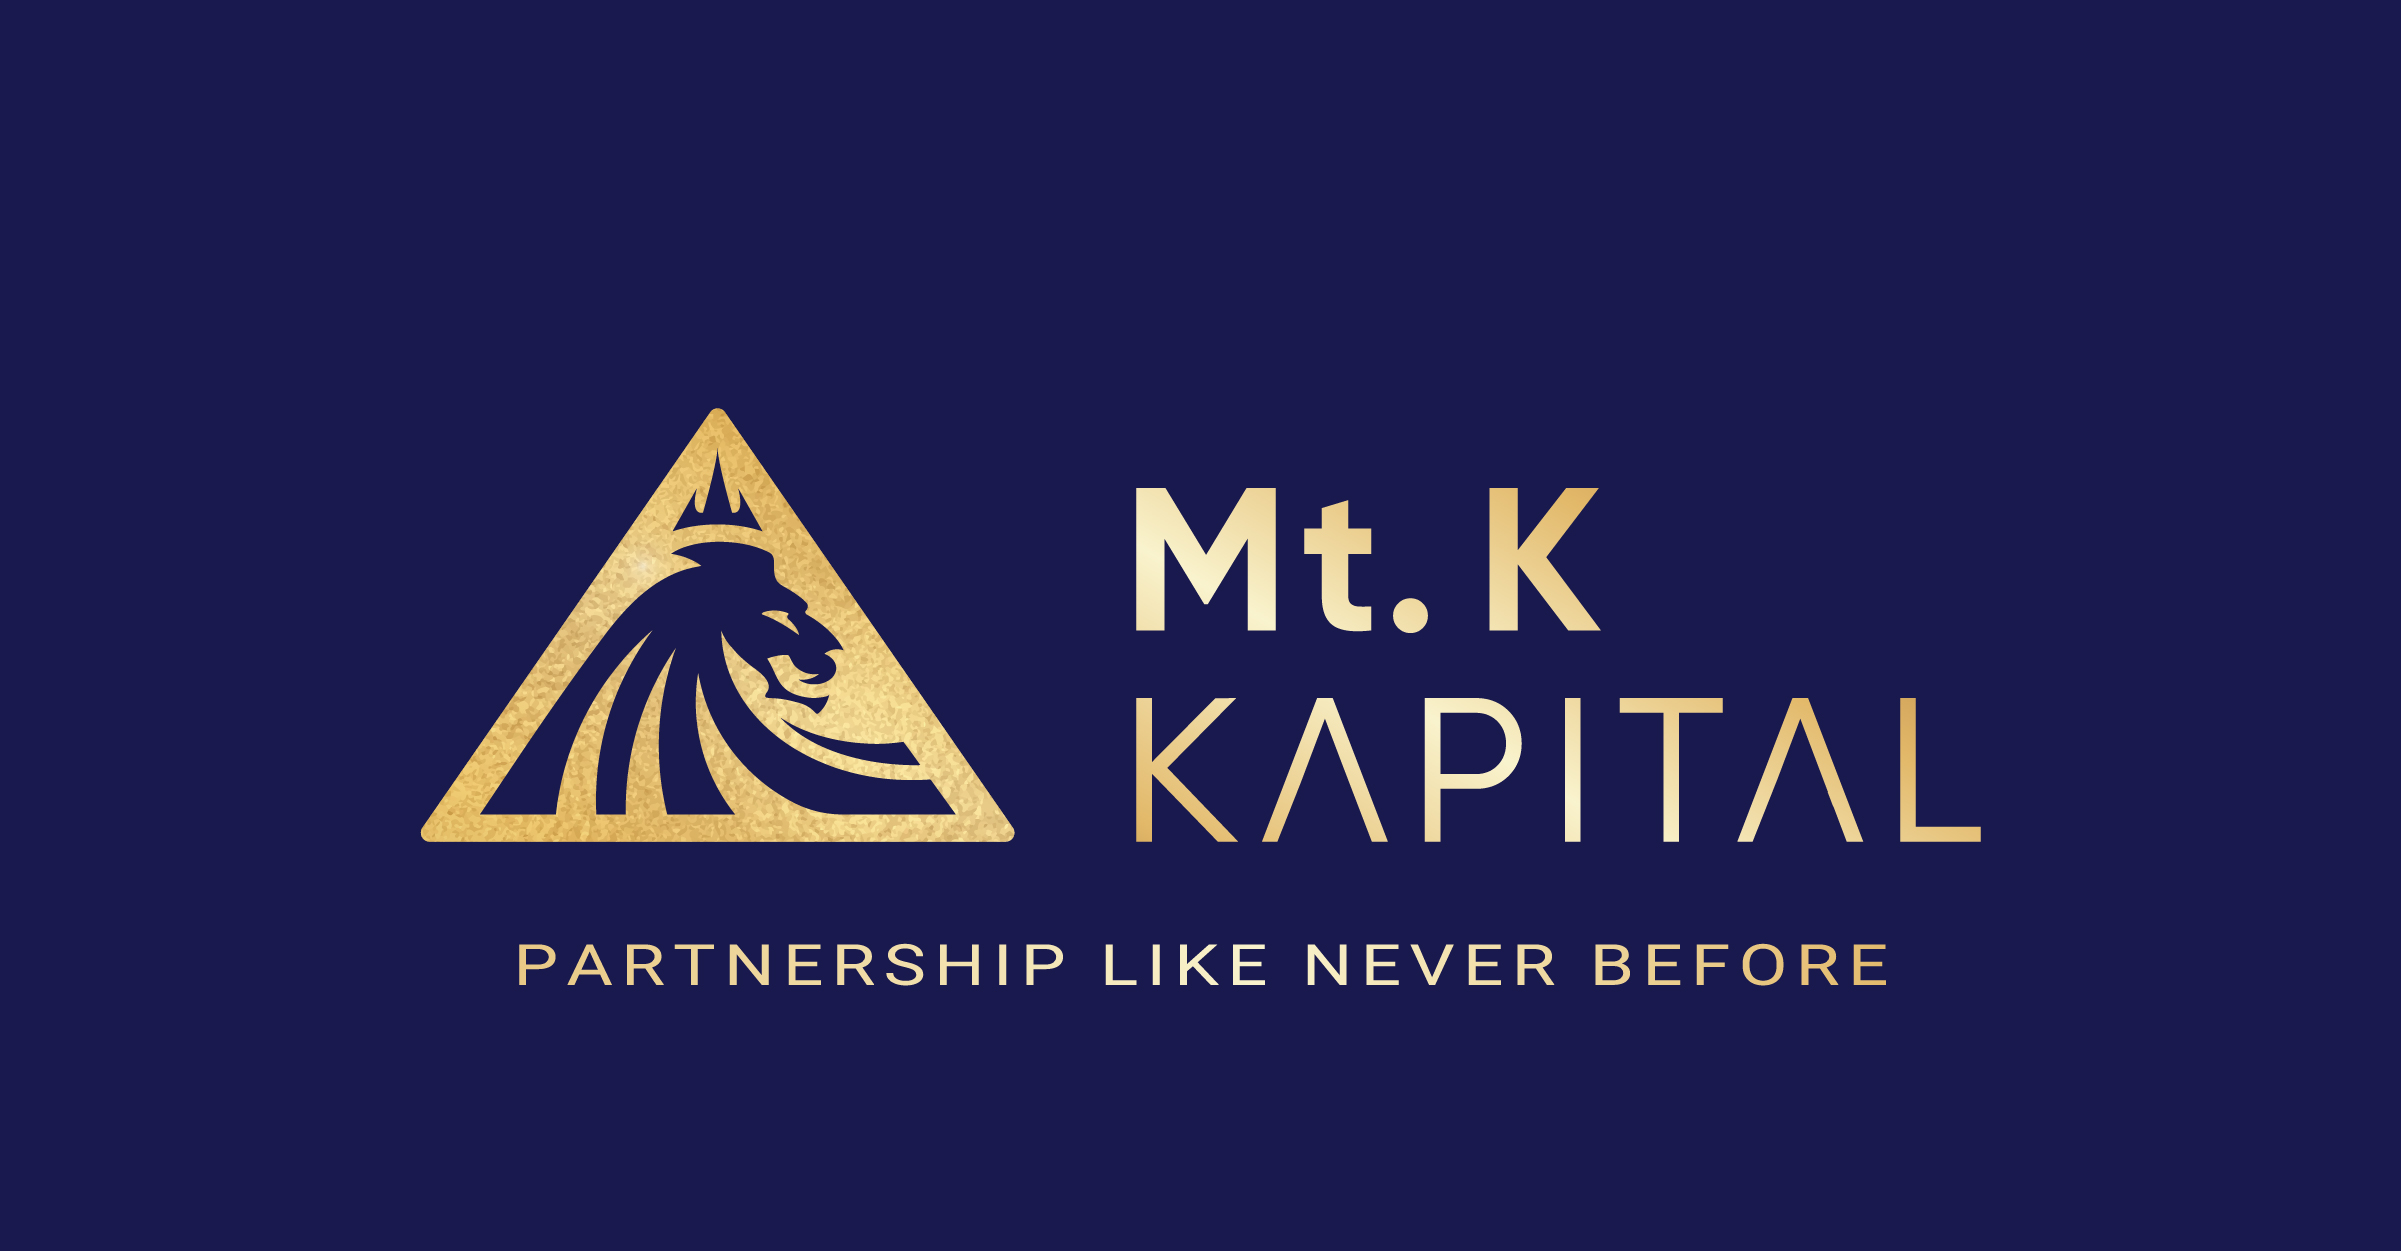 Mt. K Kapital’s maiden fund announces INR 350 crore fundraise-thumnail